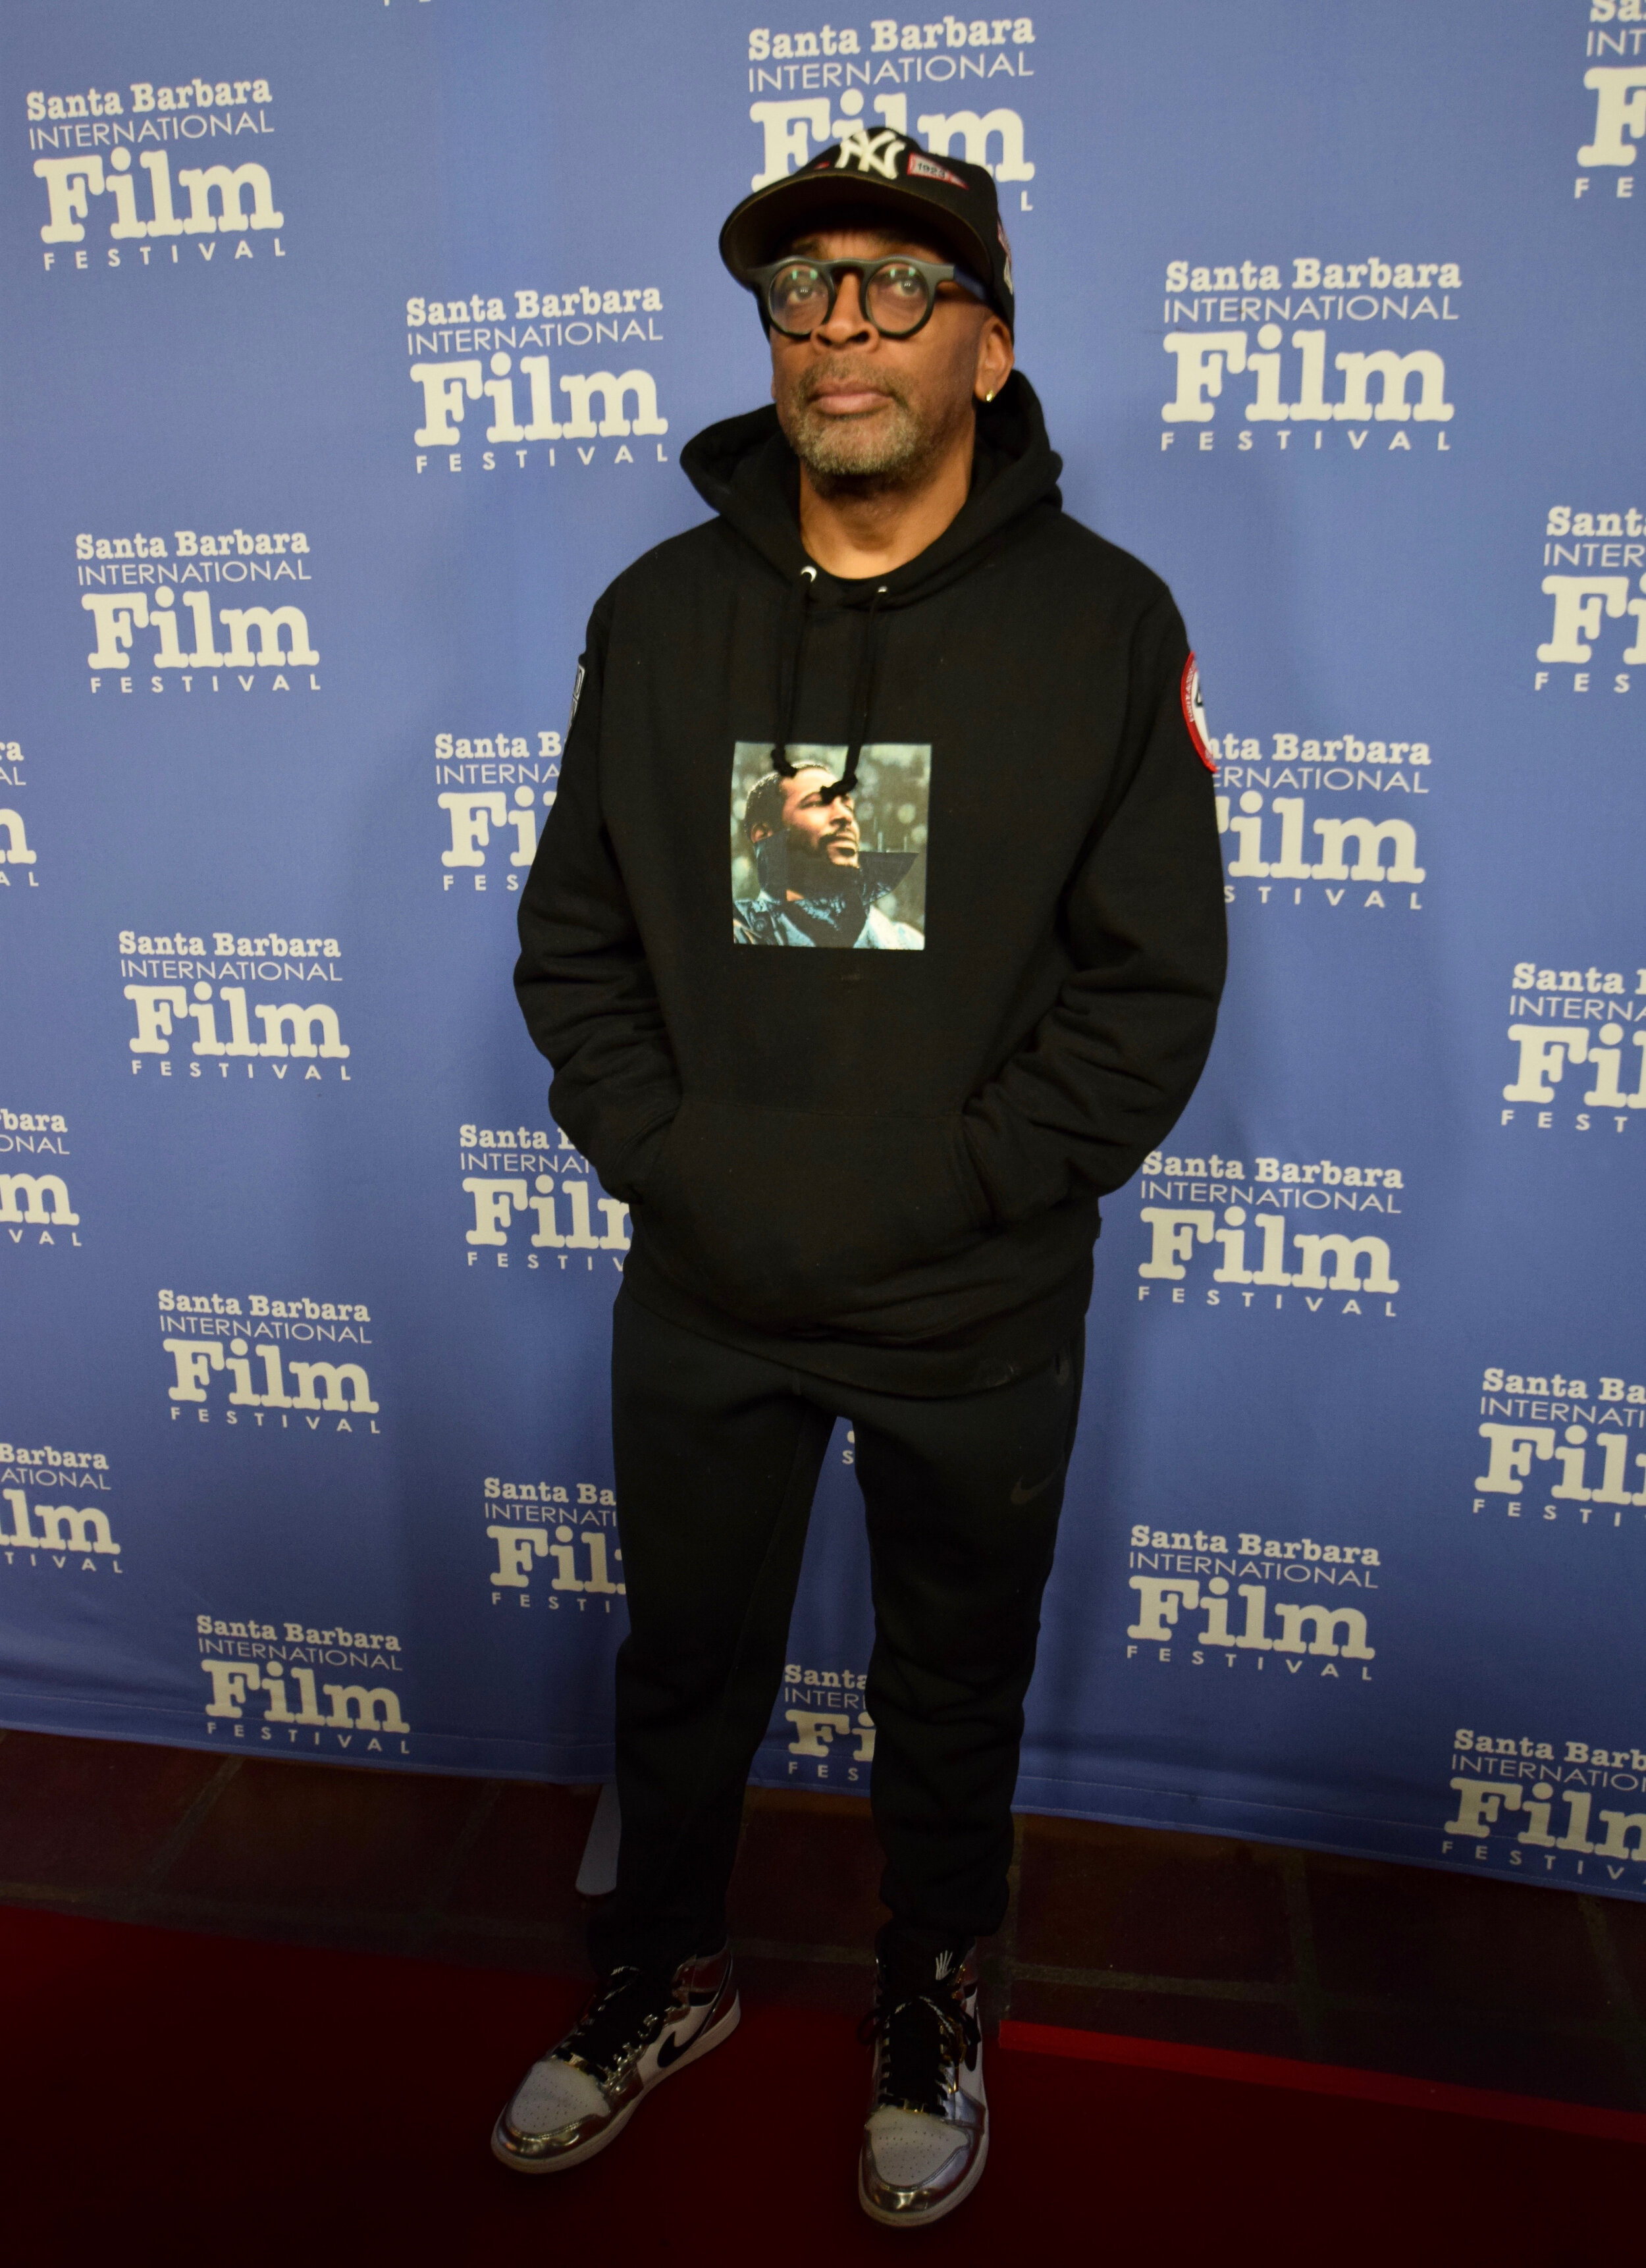  Spike Lee, Director of BlacKkKlansman, at the 34th Santa Barbara International Film Fesitval for the Outstanding Directors Award. 